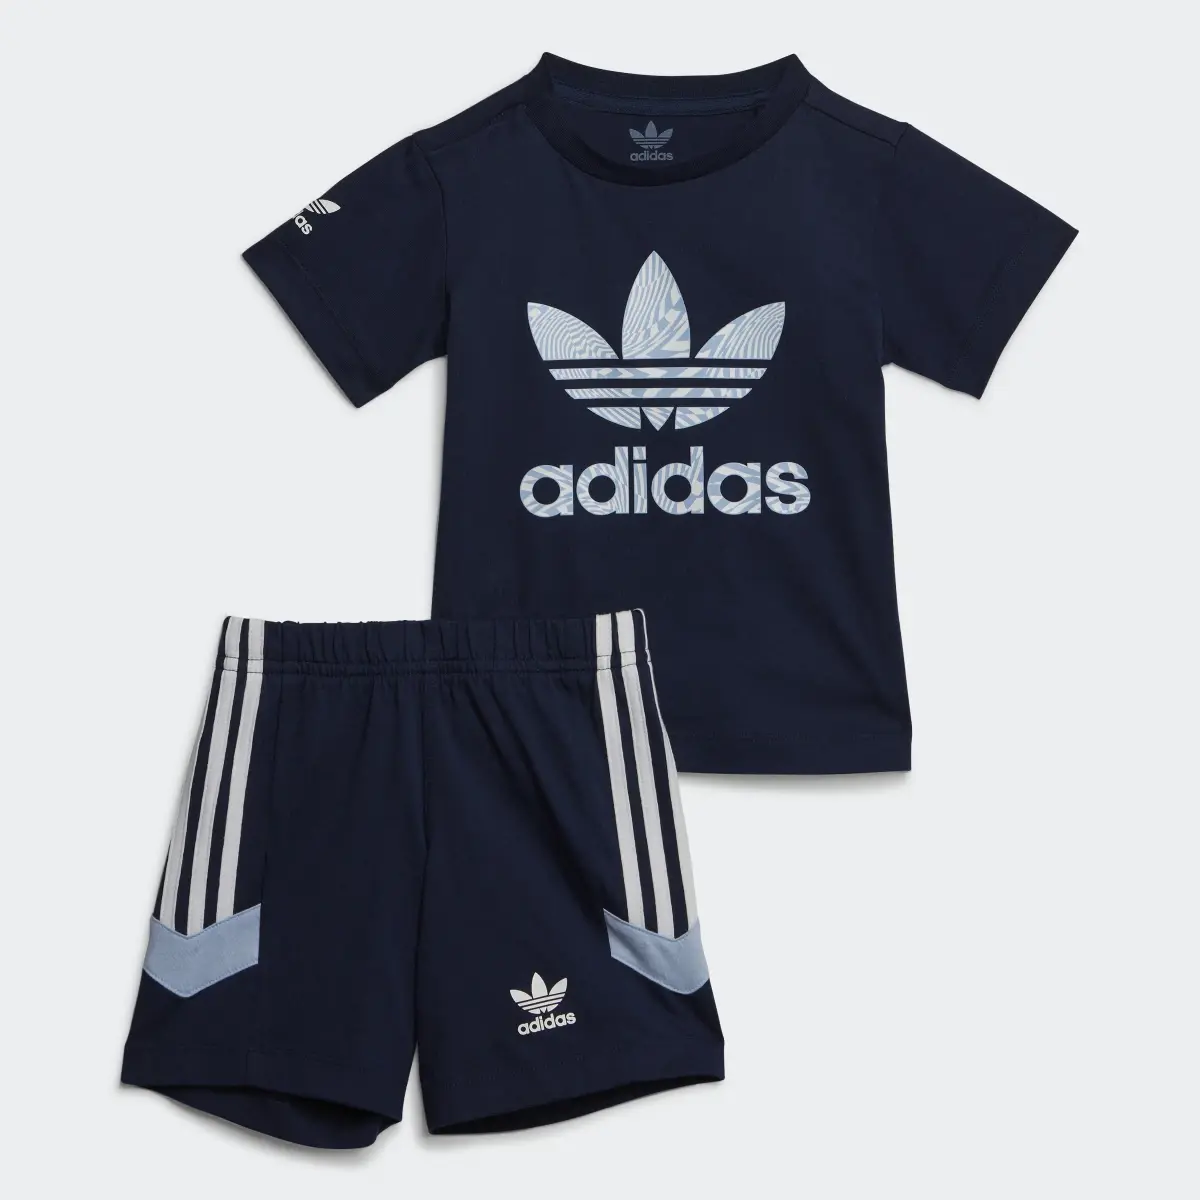 Adidas Rekive Shorts and Tee Set. 1